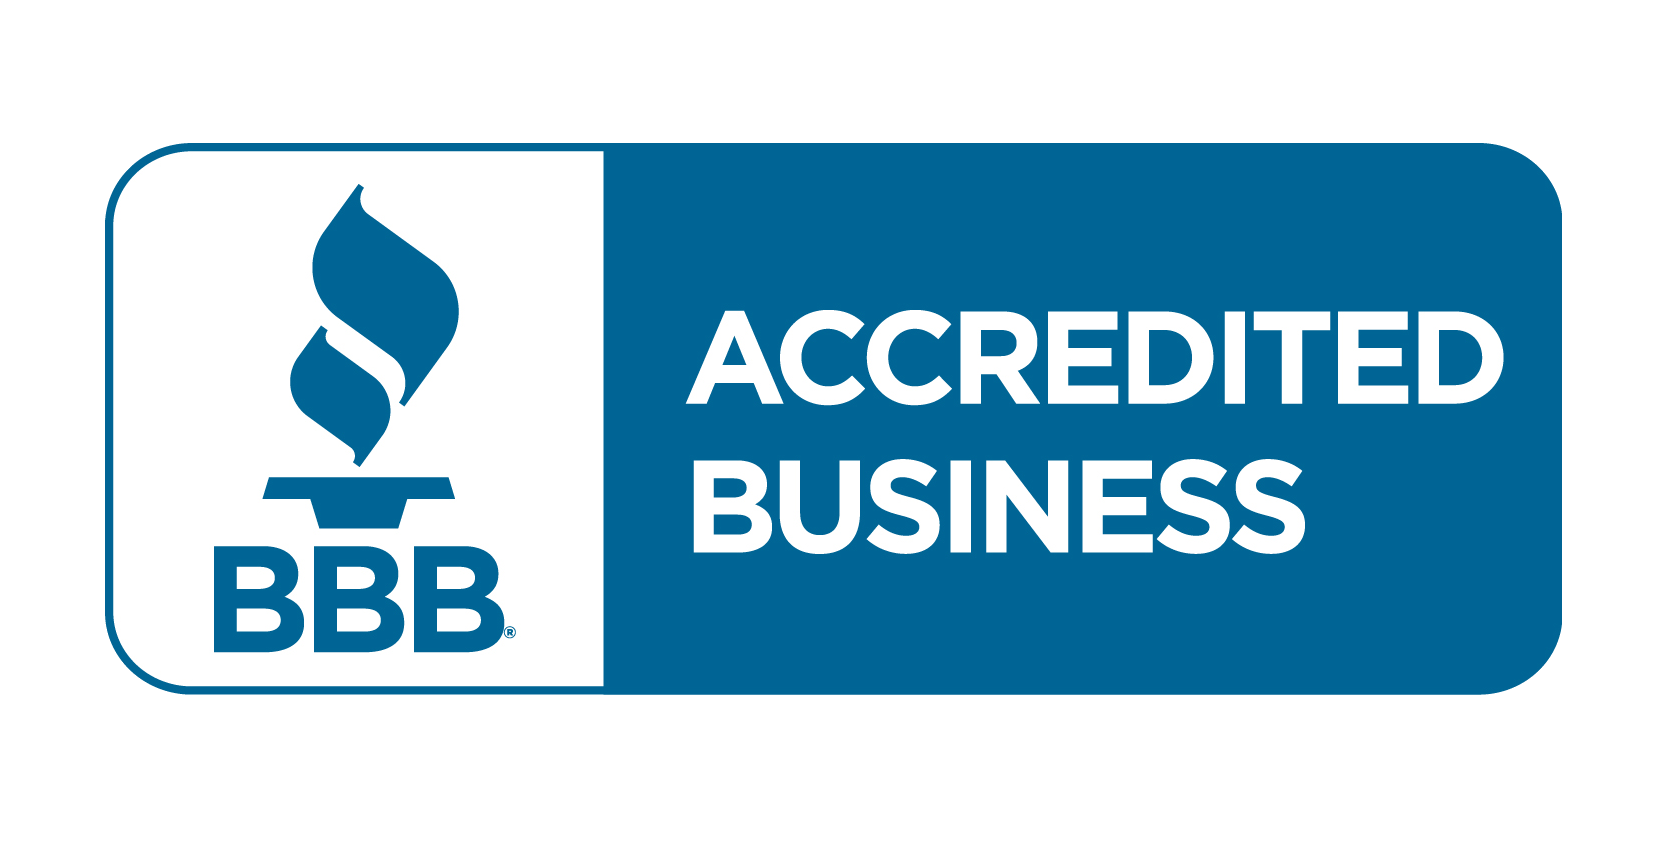 Better Business Bureau Accredited Badge